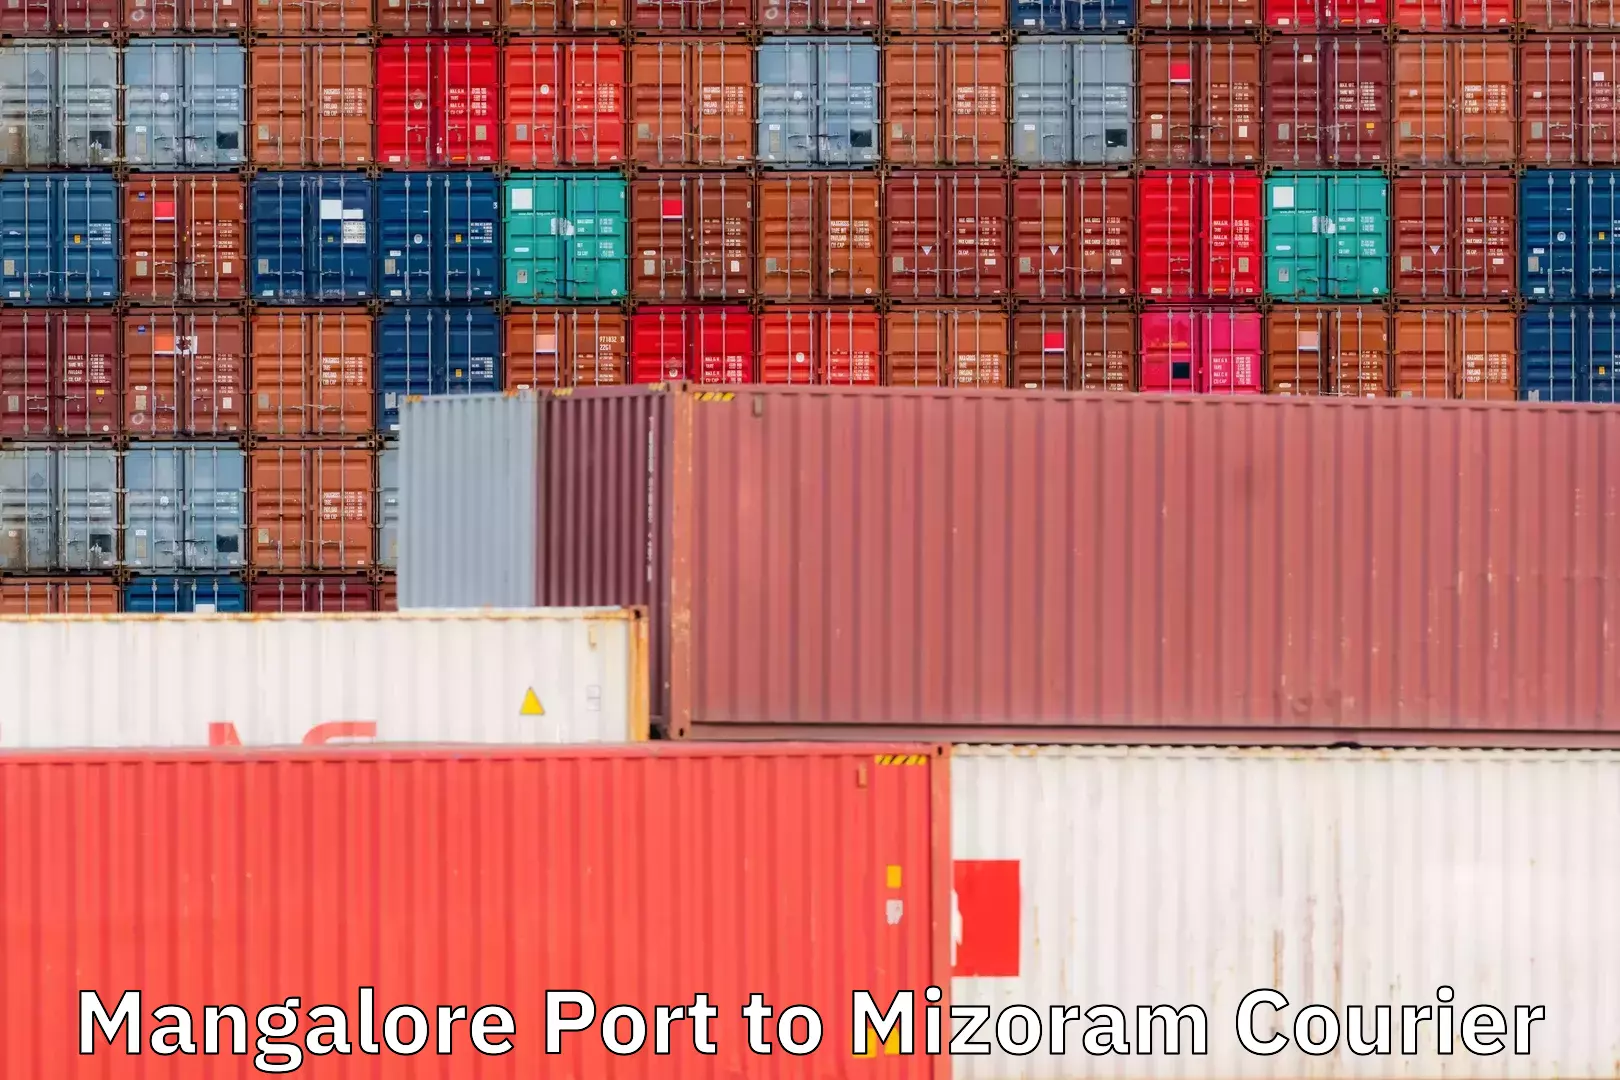 Courier service efficiency Mangalore Port to Mizoram